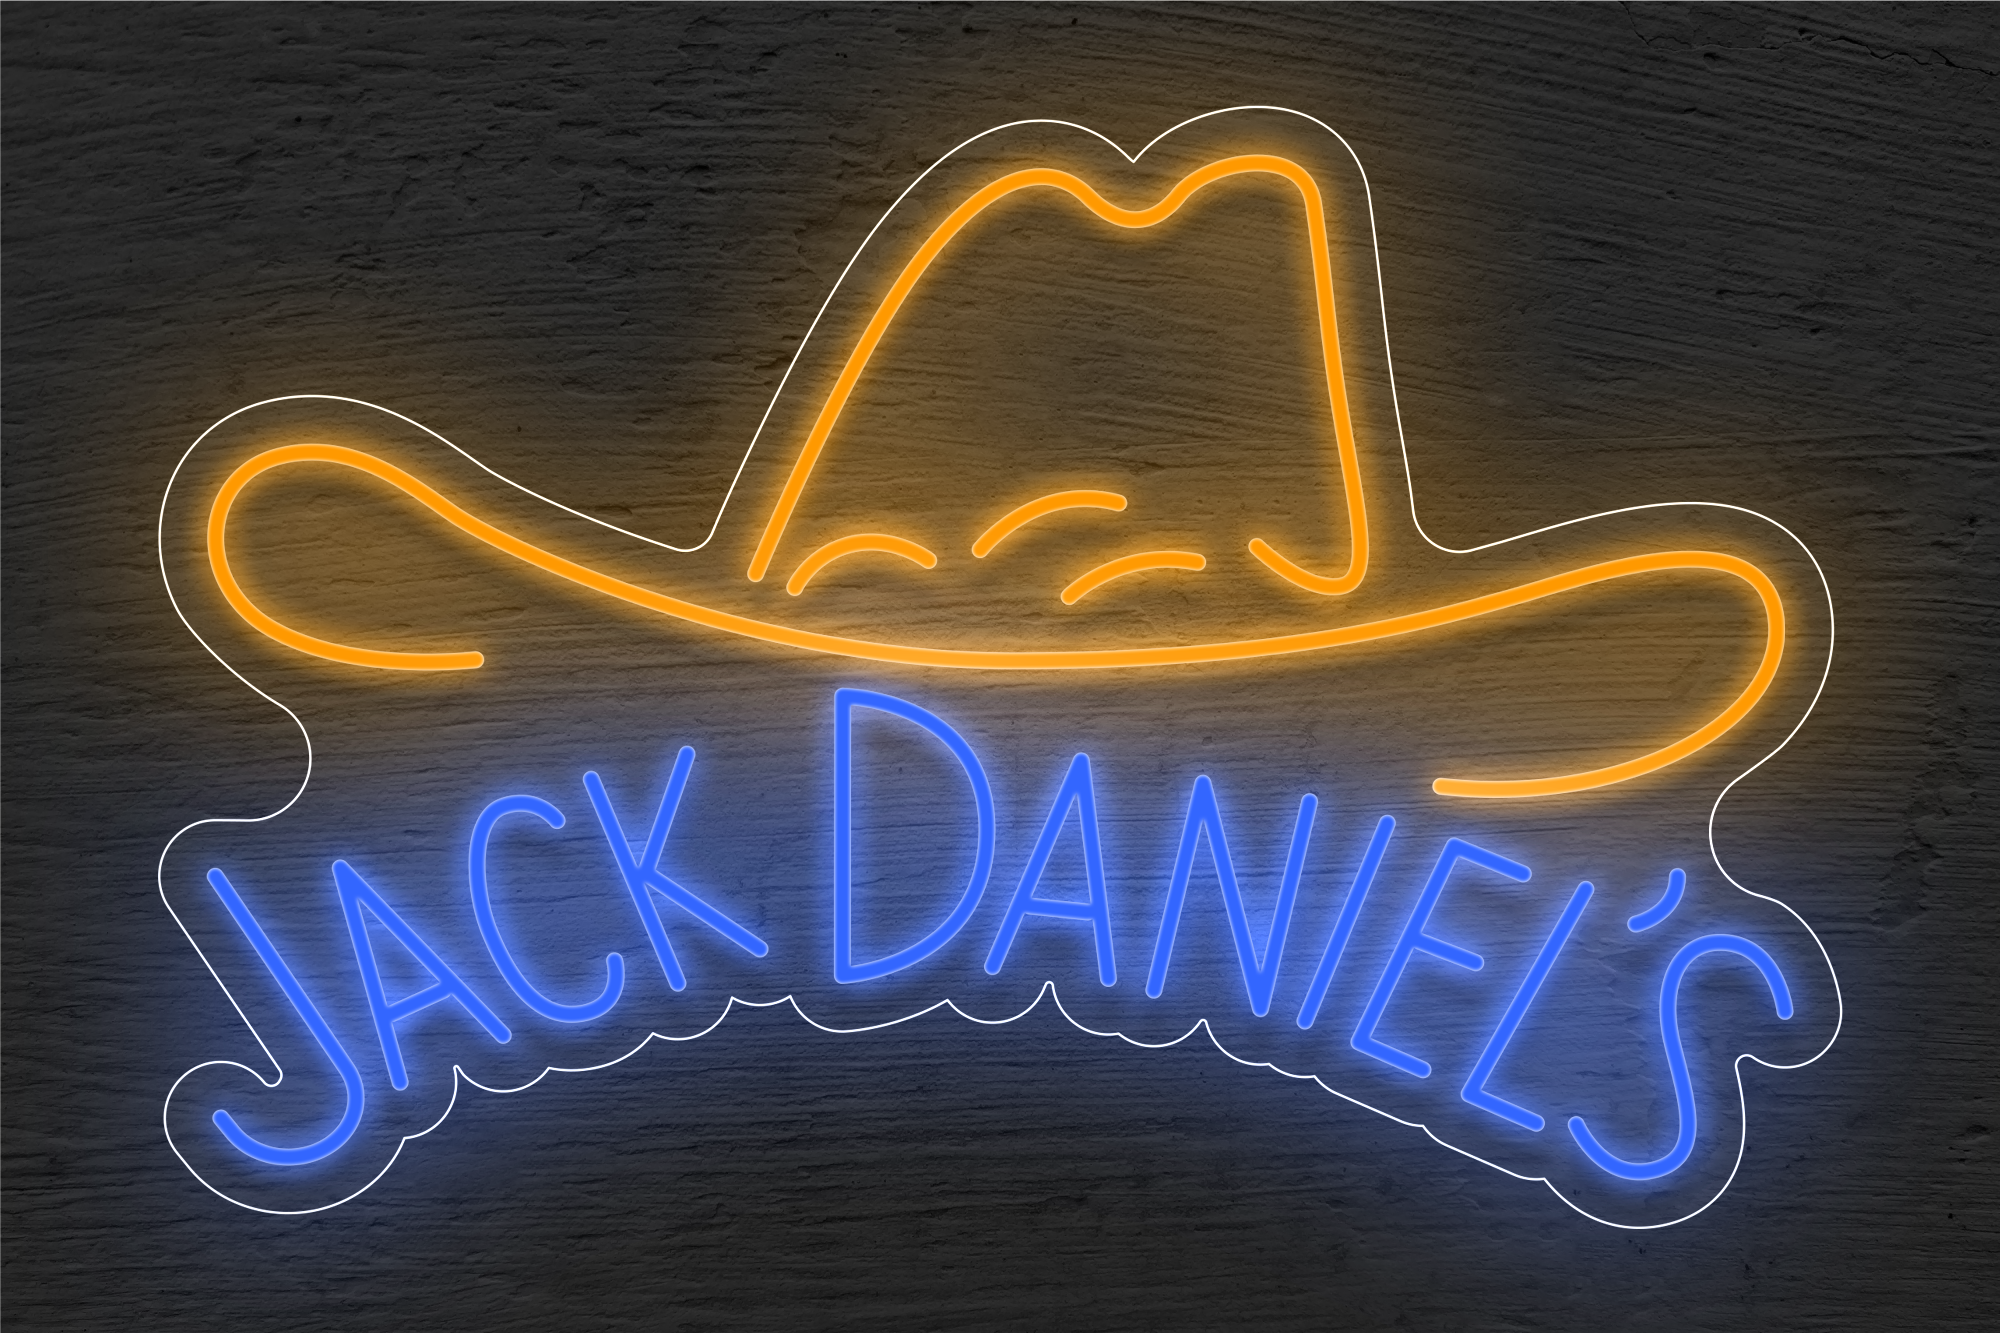 "Jack Daniel's" with Cowboy Hat LED Neon Sign